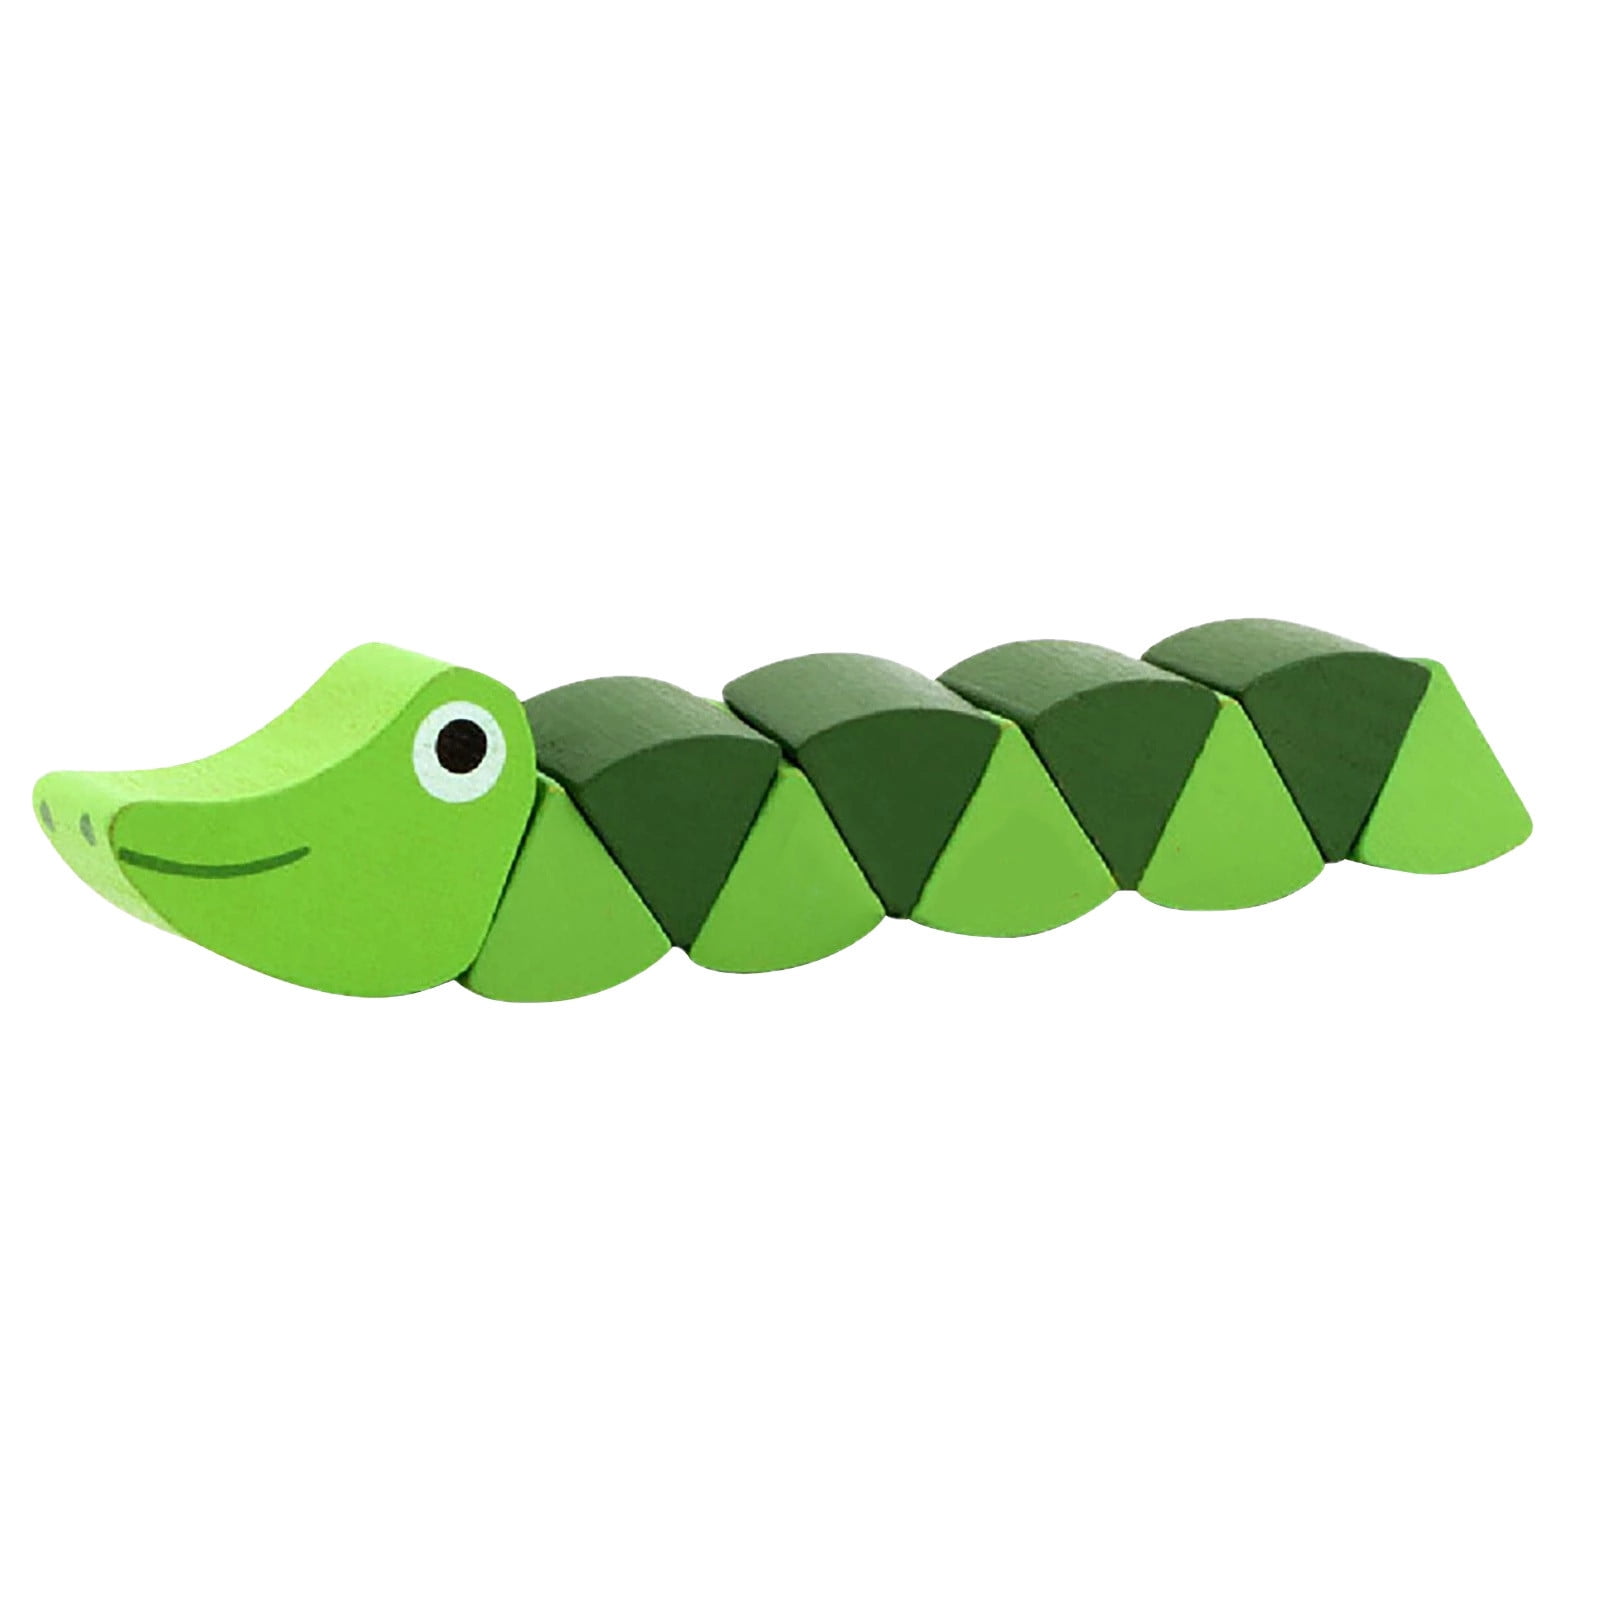 Wooden Caterpillar Children's Toy Fun Educational Shape Twister Developmental 